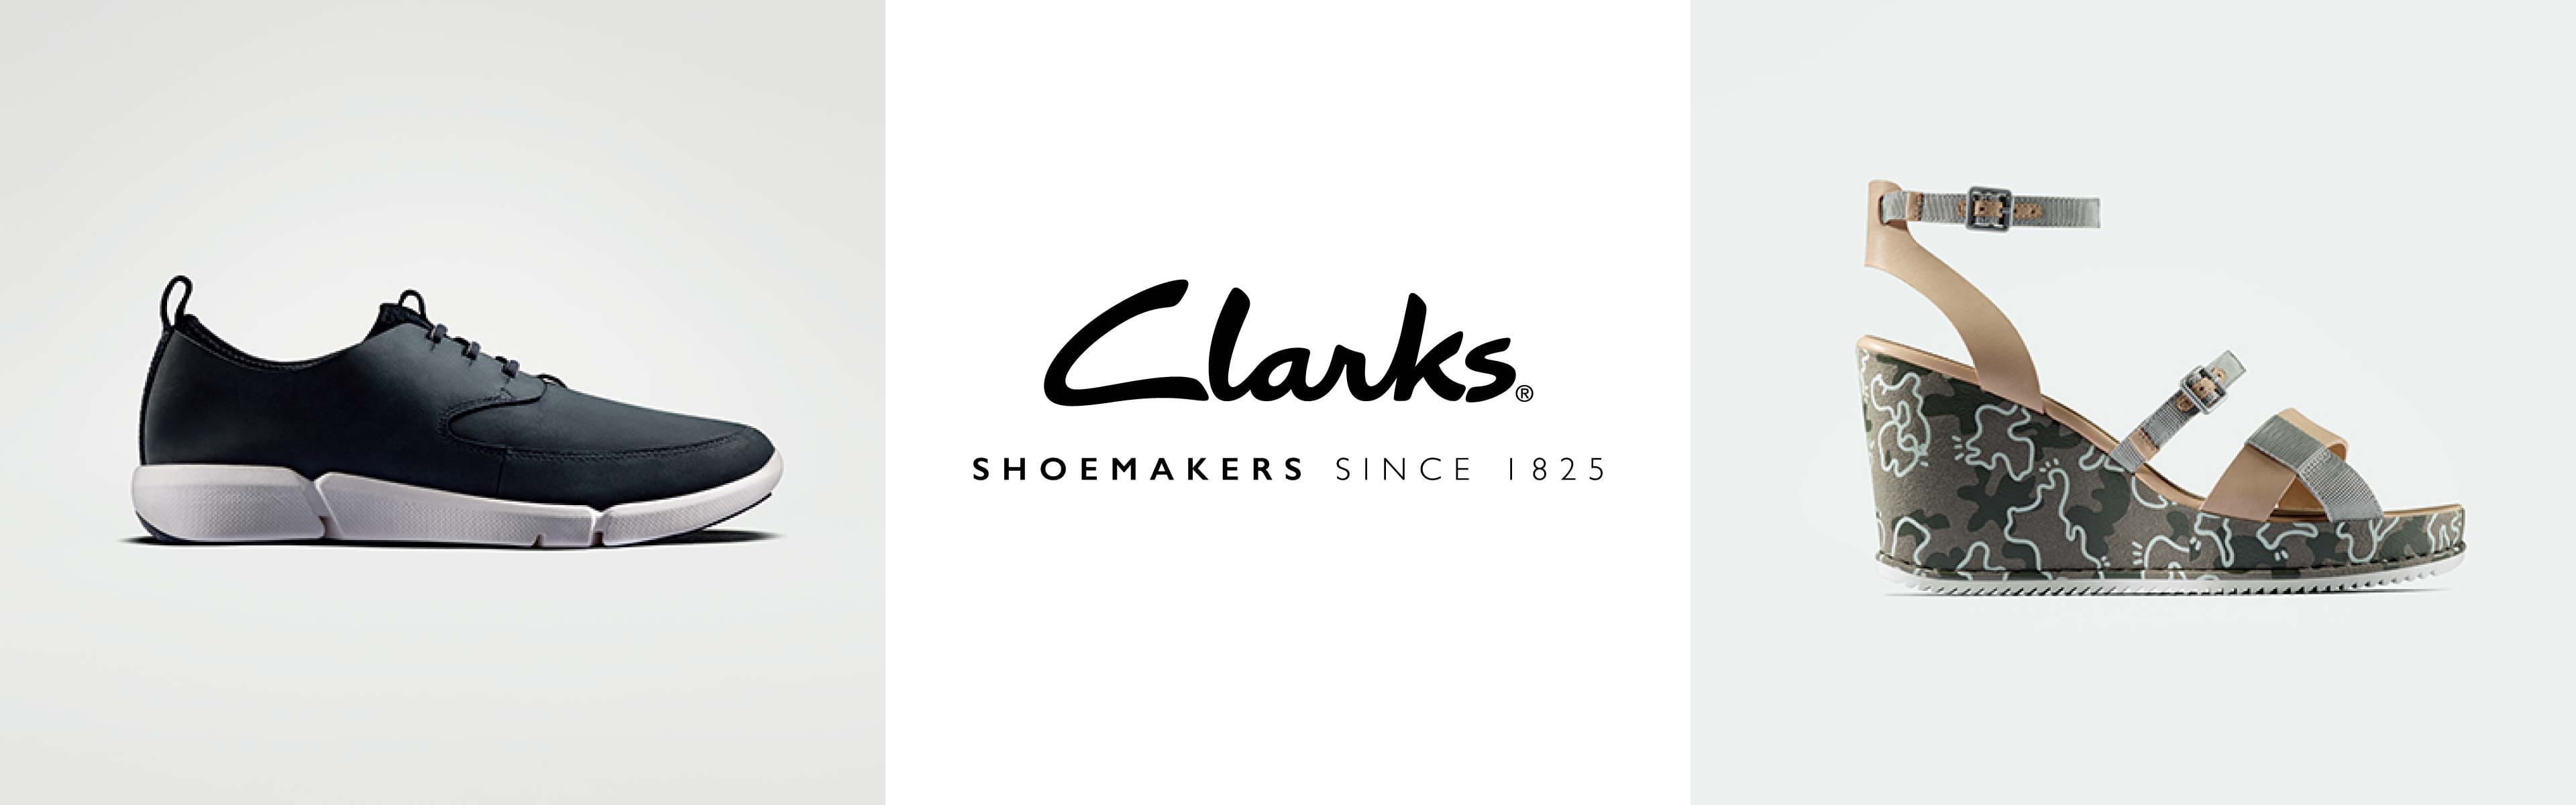 clarks shoes sales outlet